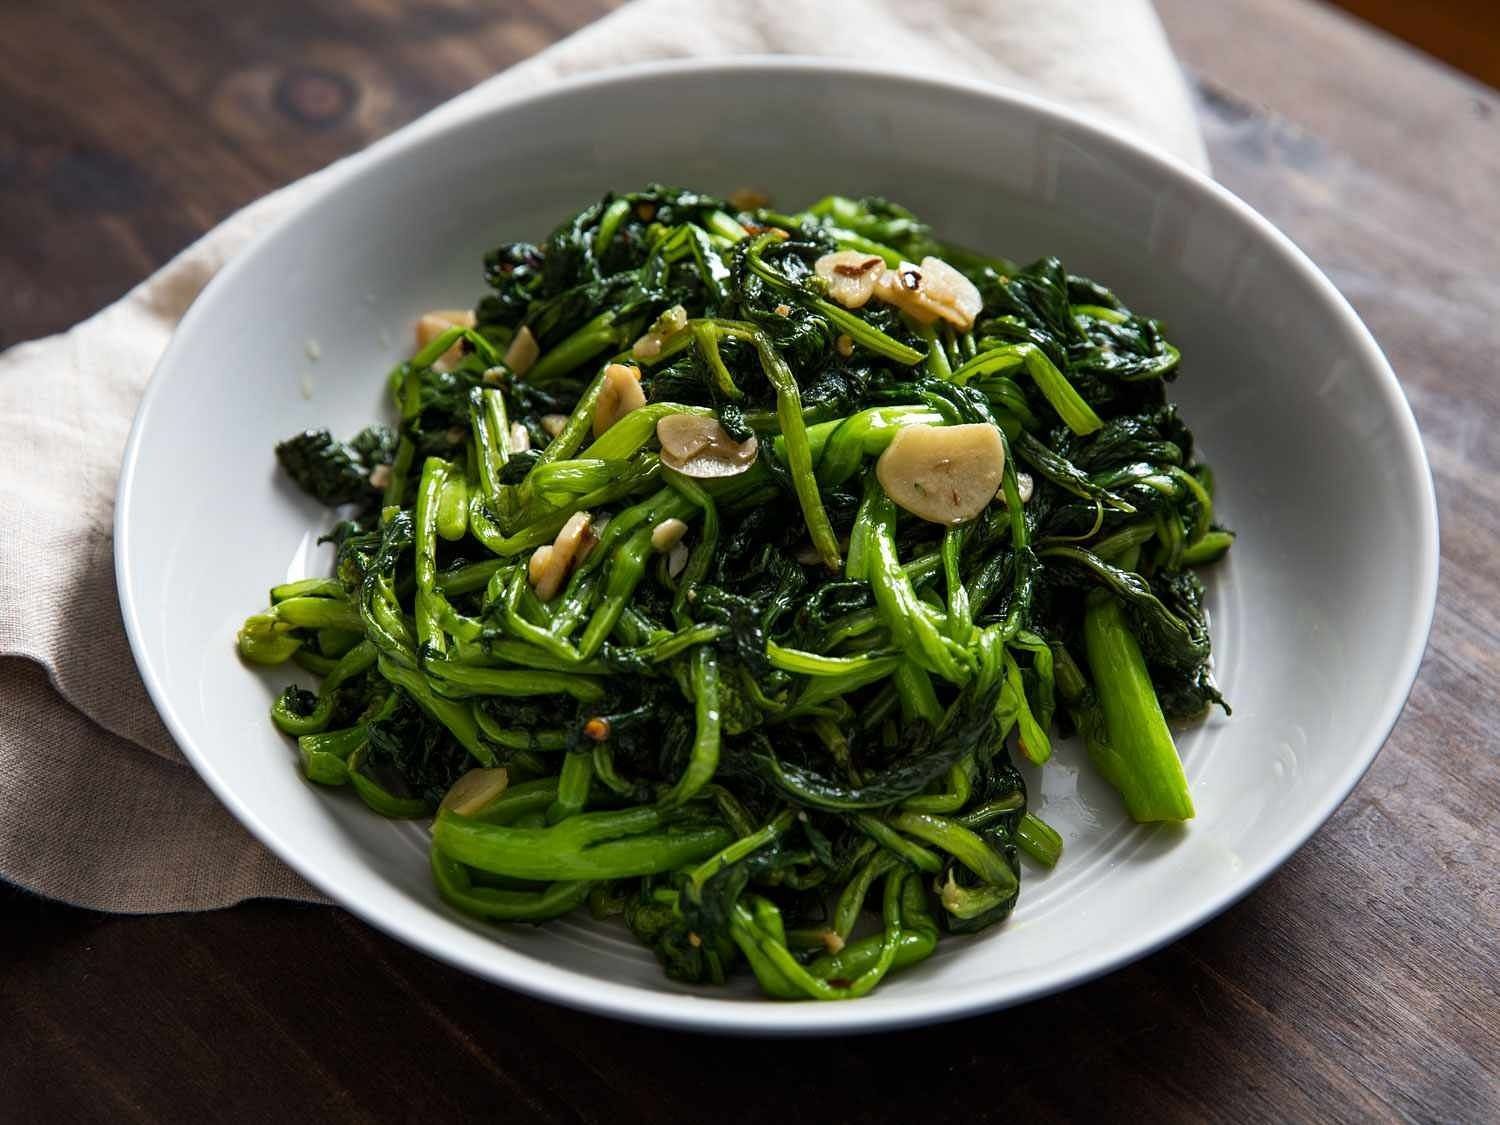 Broccoli-rabe (Image via Serious eats)